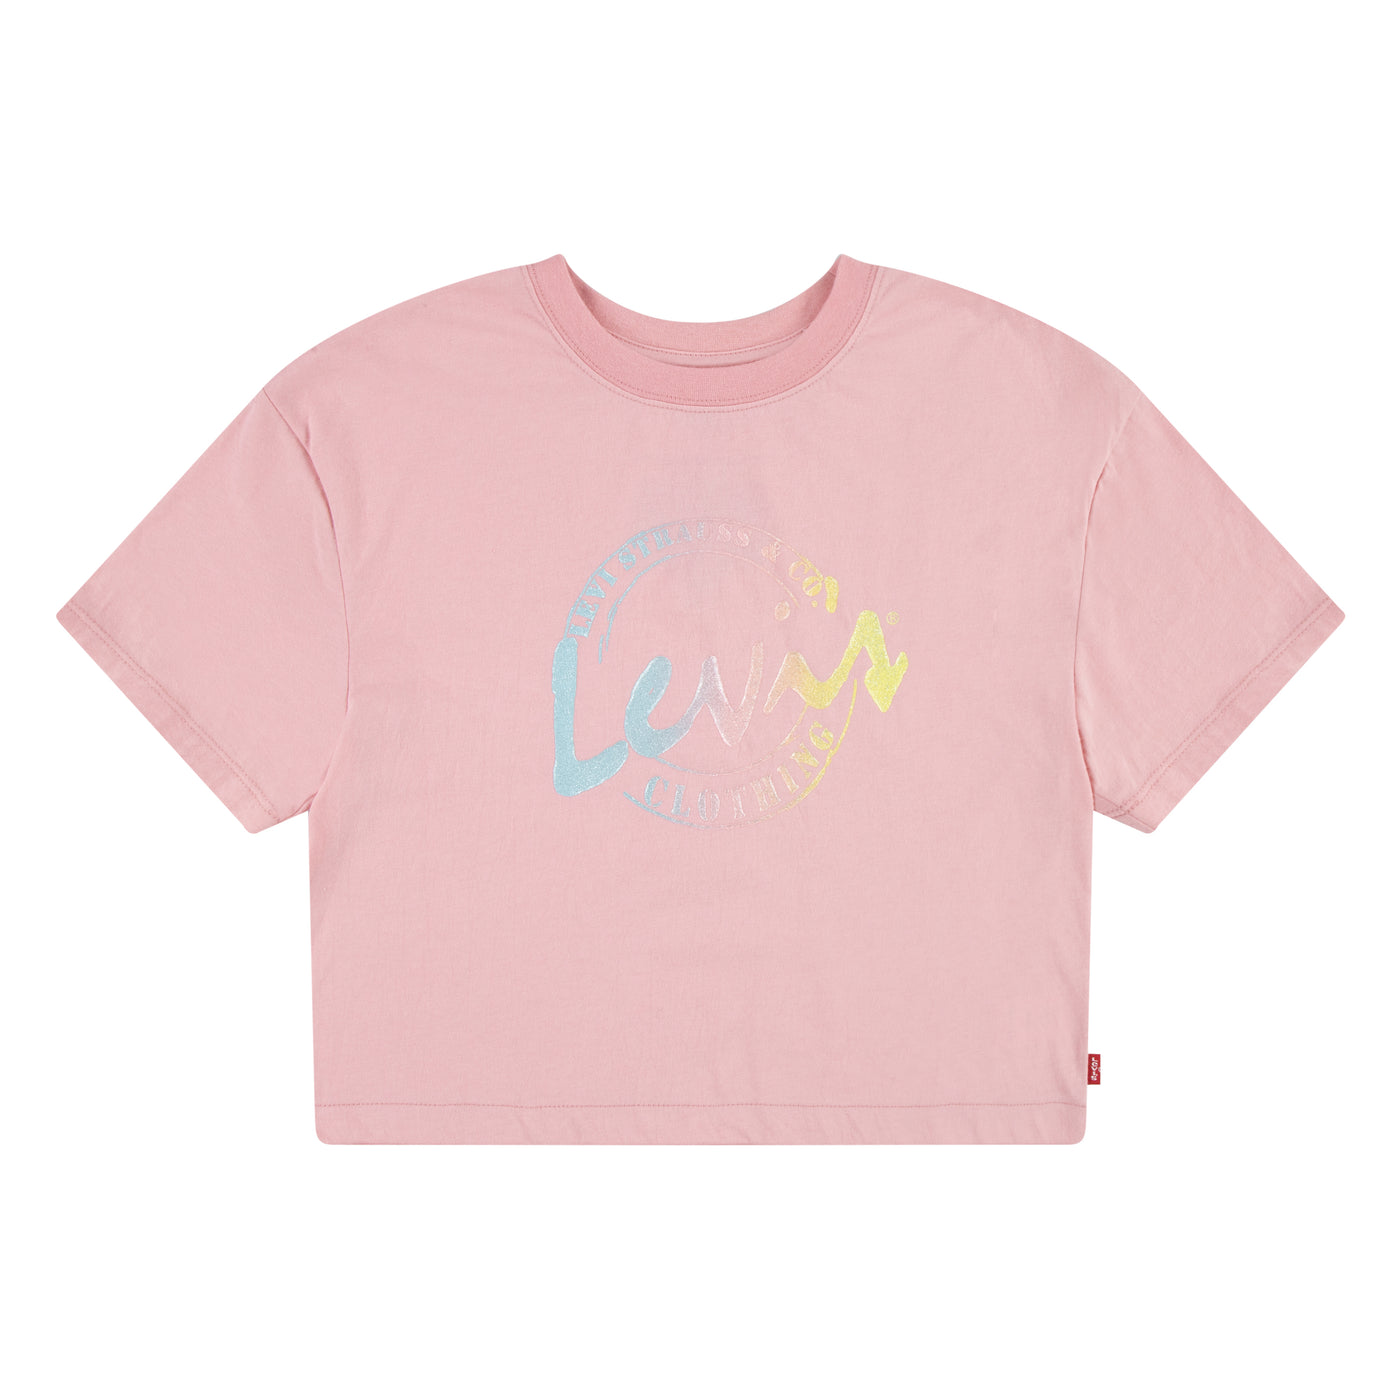 Levi's® pink screen print graphic tee T Shirt Levi's   